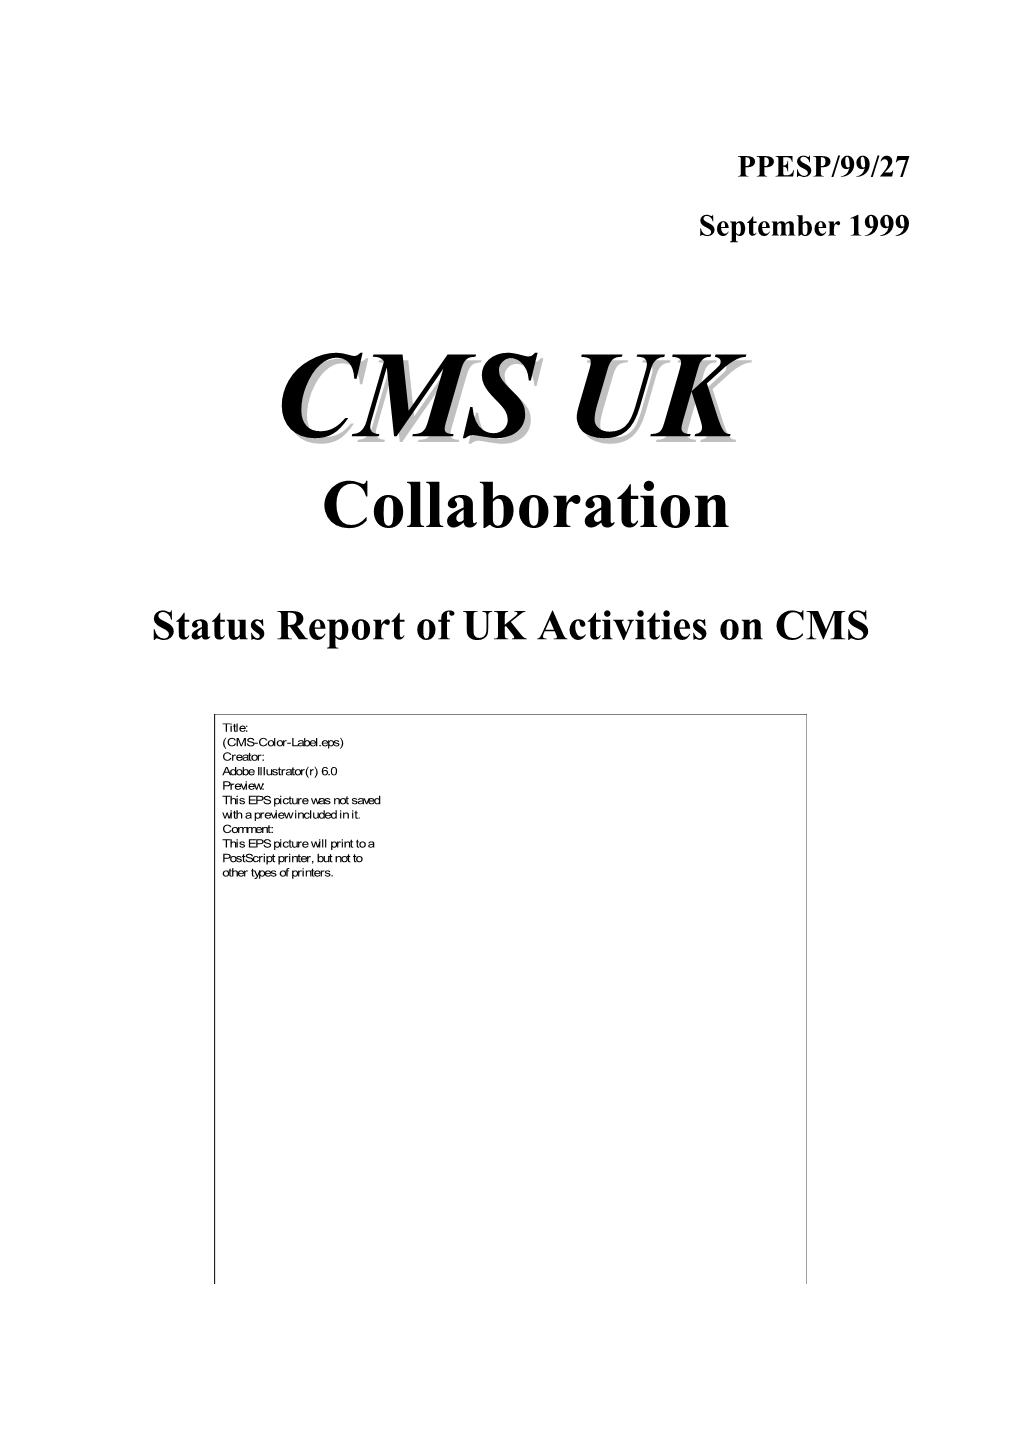 Status Report of UK Activities on CMS